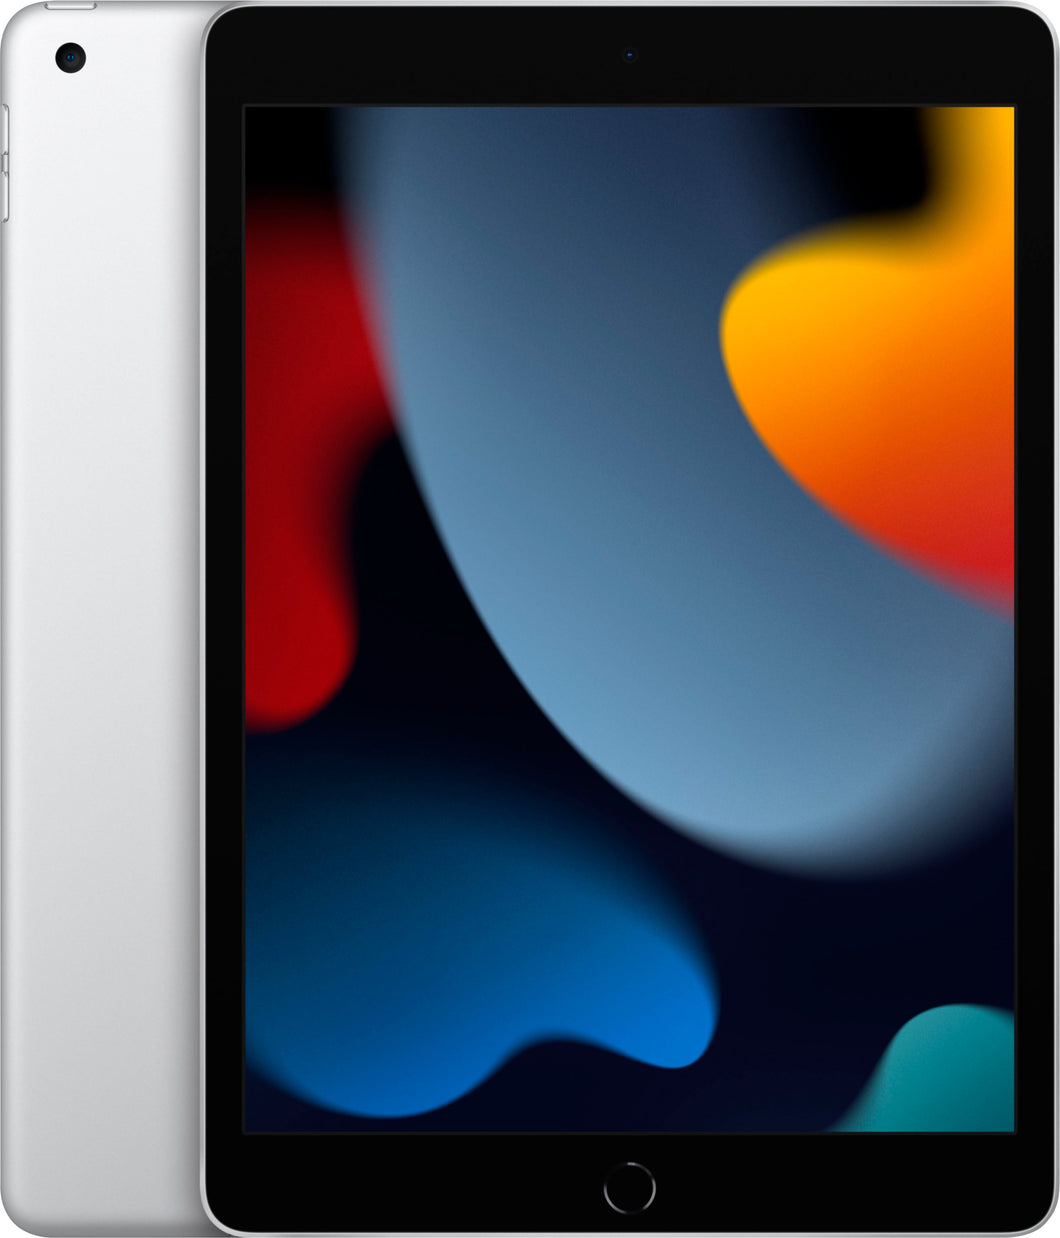 Apple iPad 9th Gen (2021) 256GB, Wi-Fi, 10.2in Tablet - Silver MK2P3LL/A